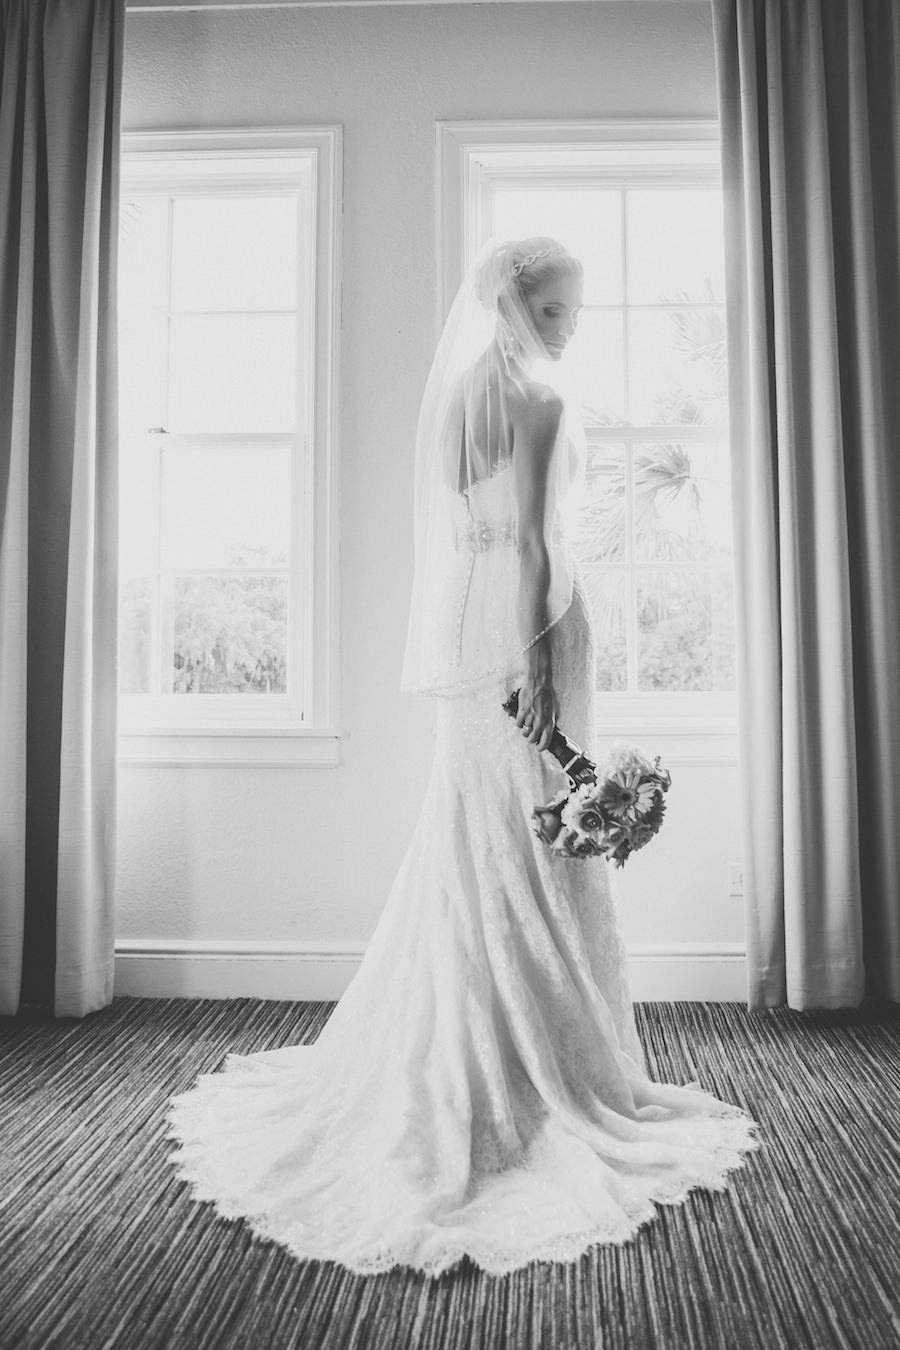 Bridal Wedding Portrait in Window in Lace, White Wedding Dress and Crystal, Rhinestone Belt